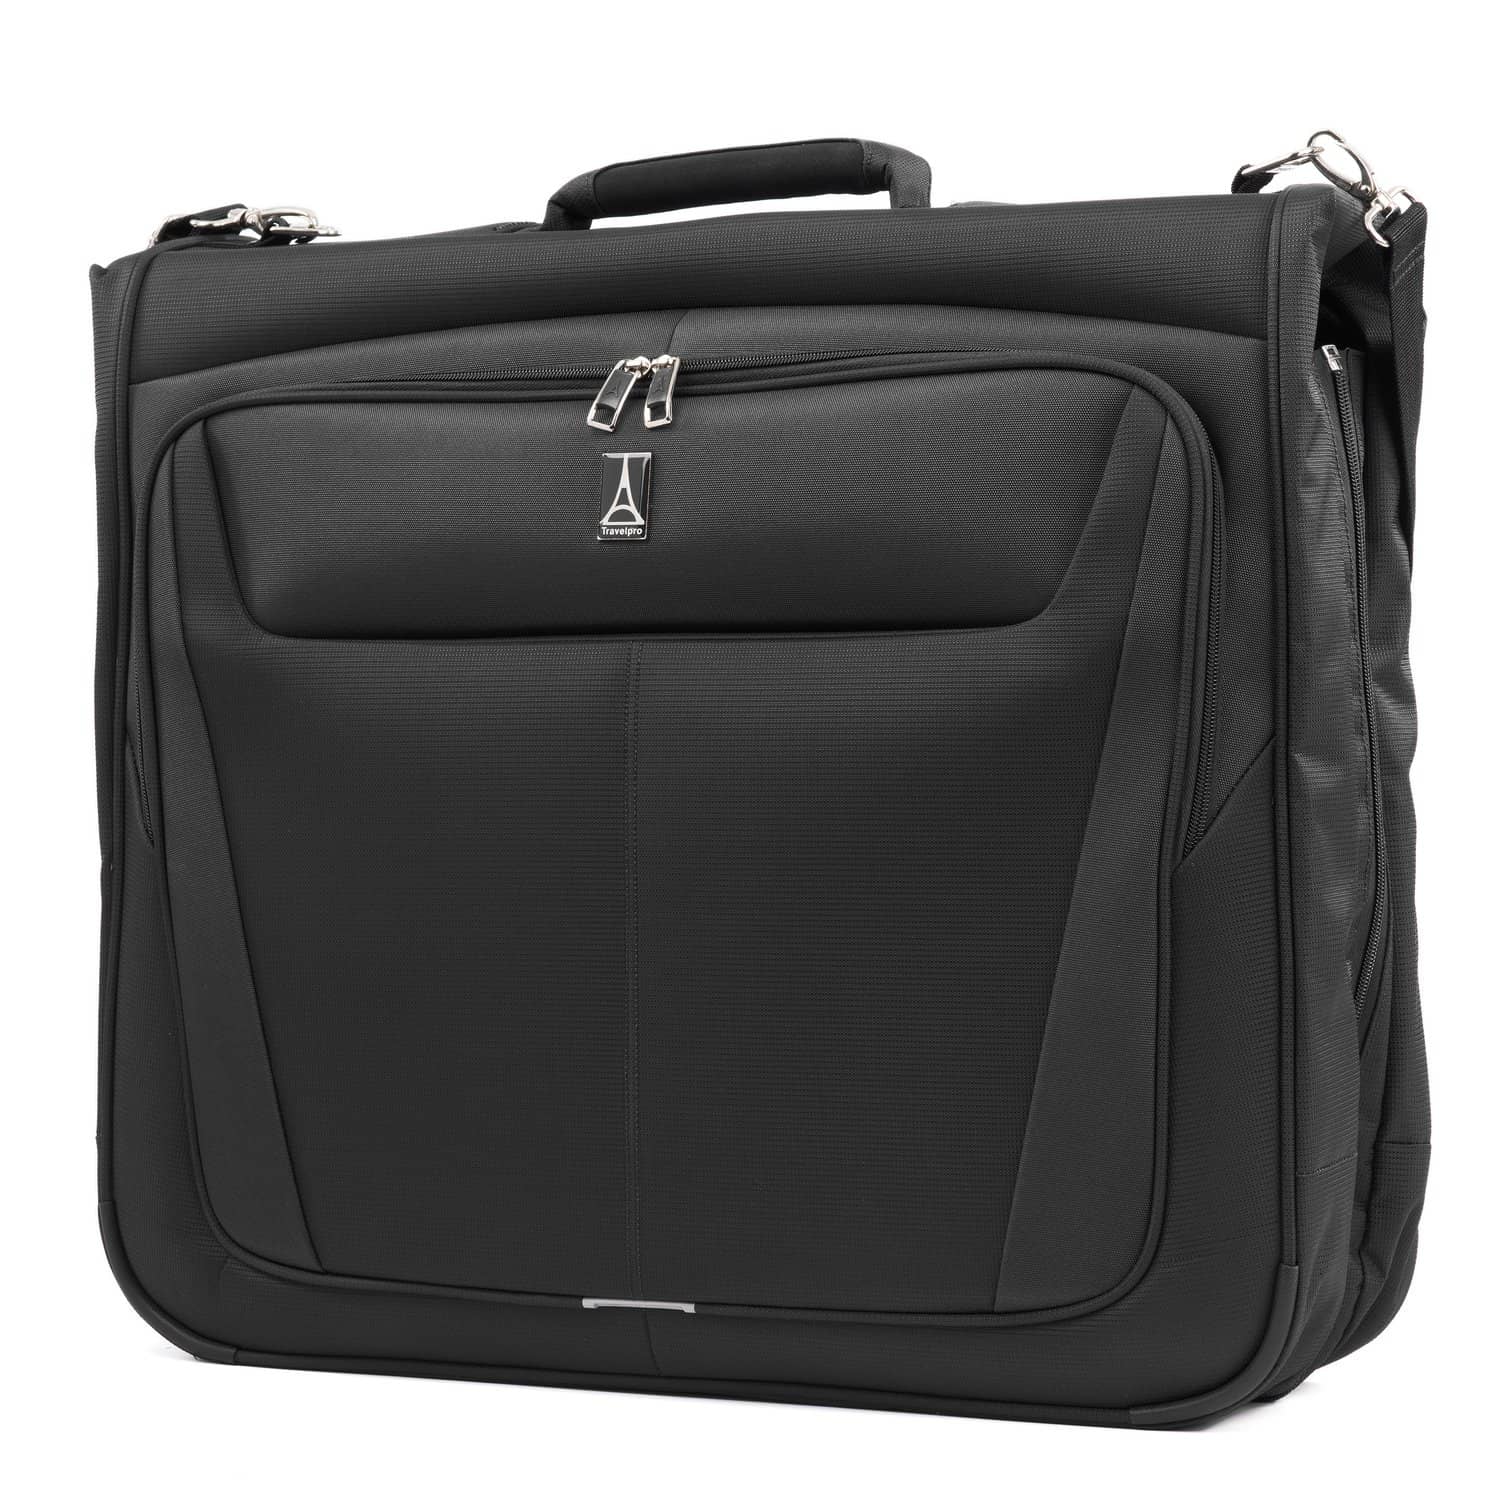 Maxlite® 5 Bi-Fold Hanging Garment Bag | Travelpro®